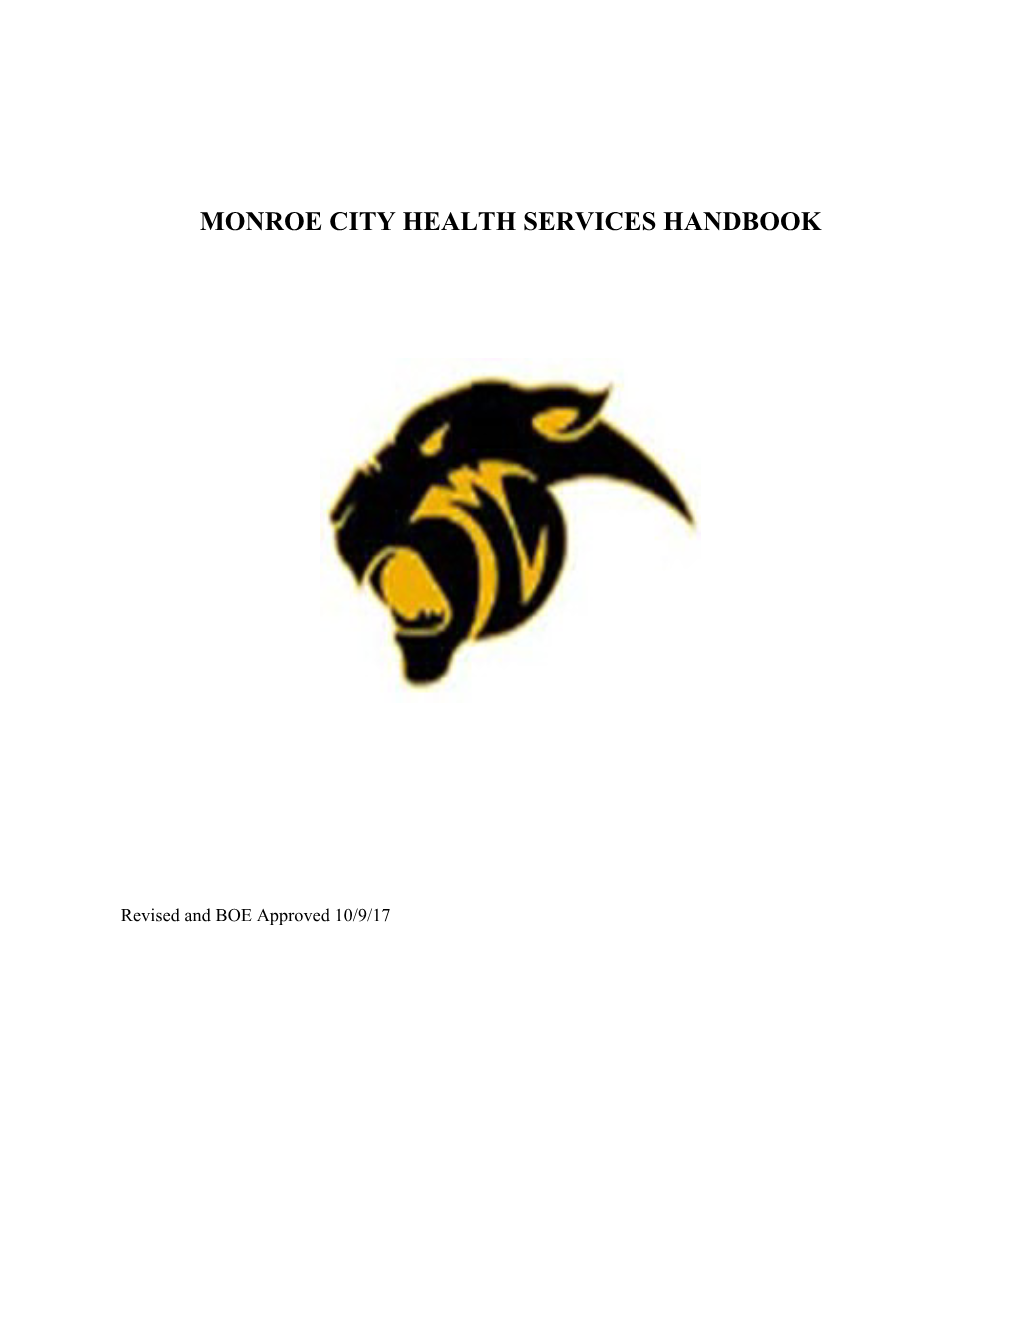 Monroe City Health Services Handbook